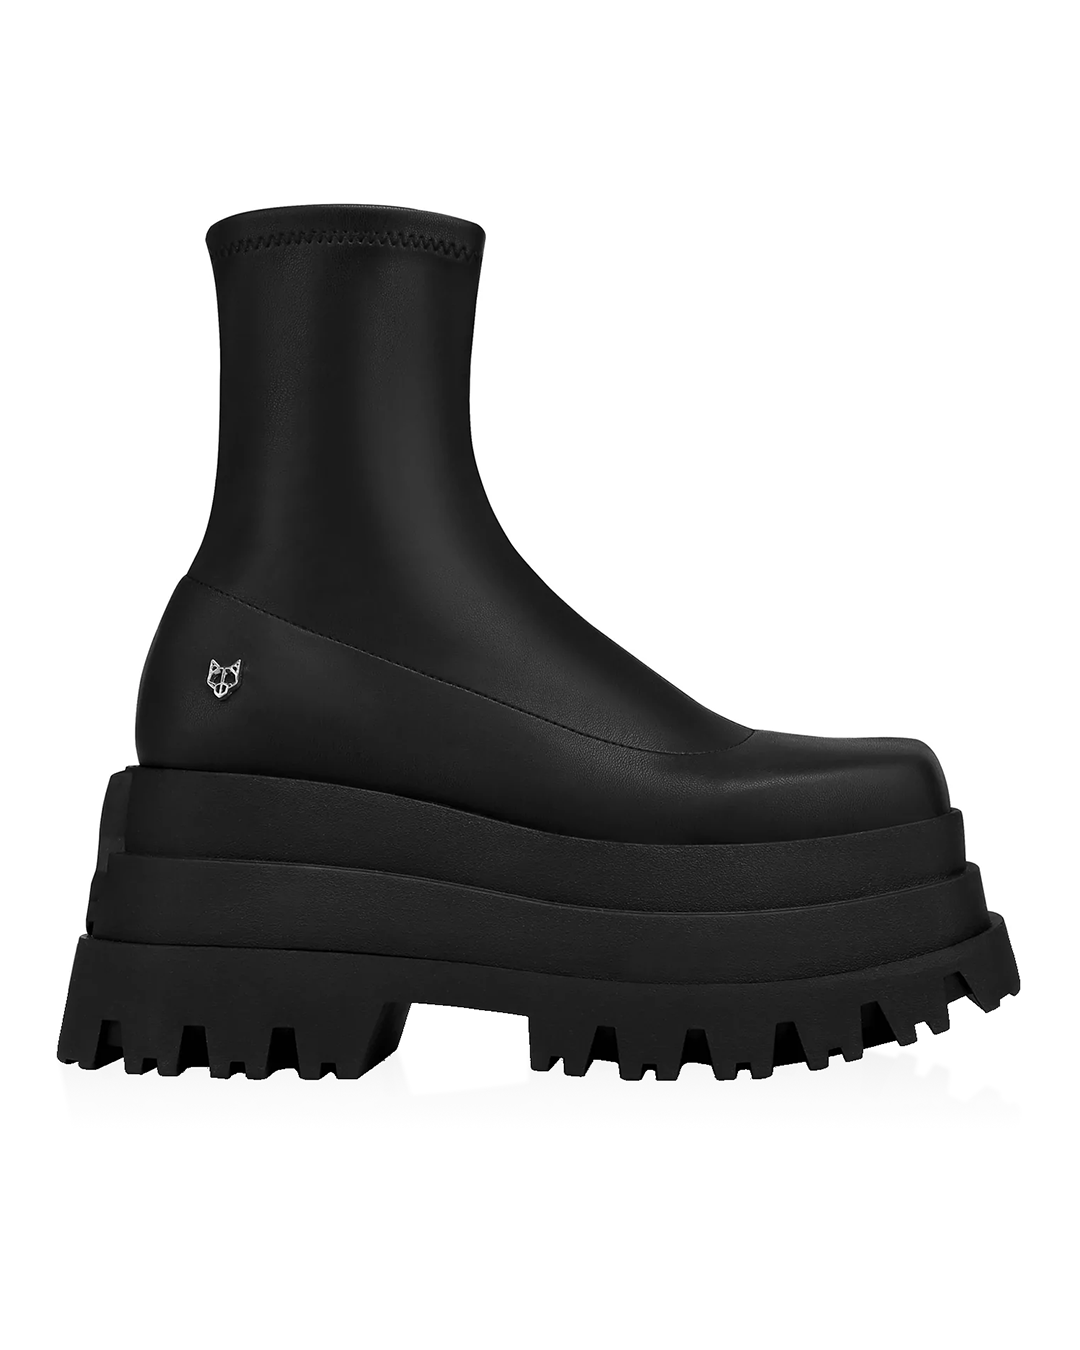 NaKED WOLFE ботинки черного цвета купить по цене 29100 р-